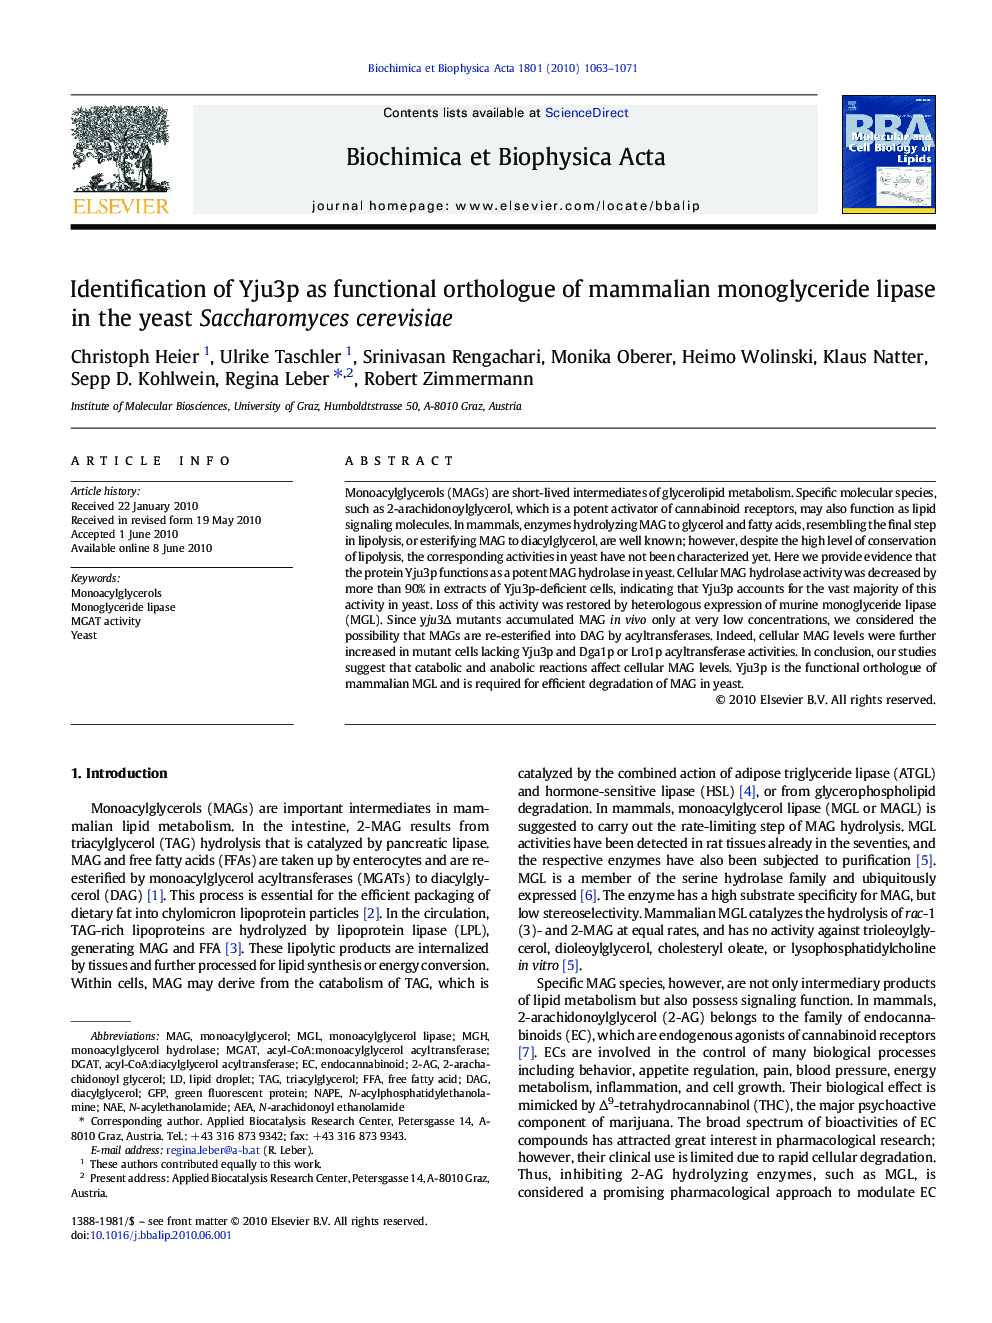 Identification of Yju3p as functional orthologue of mammalian monoglyceride lipase in the yeast Saccharomycescerevisiae